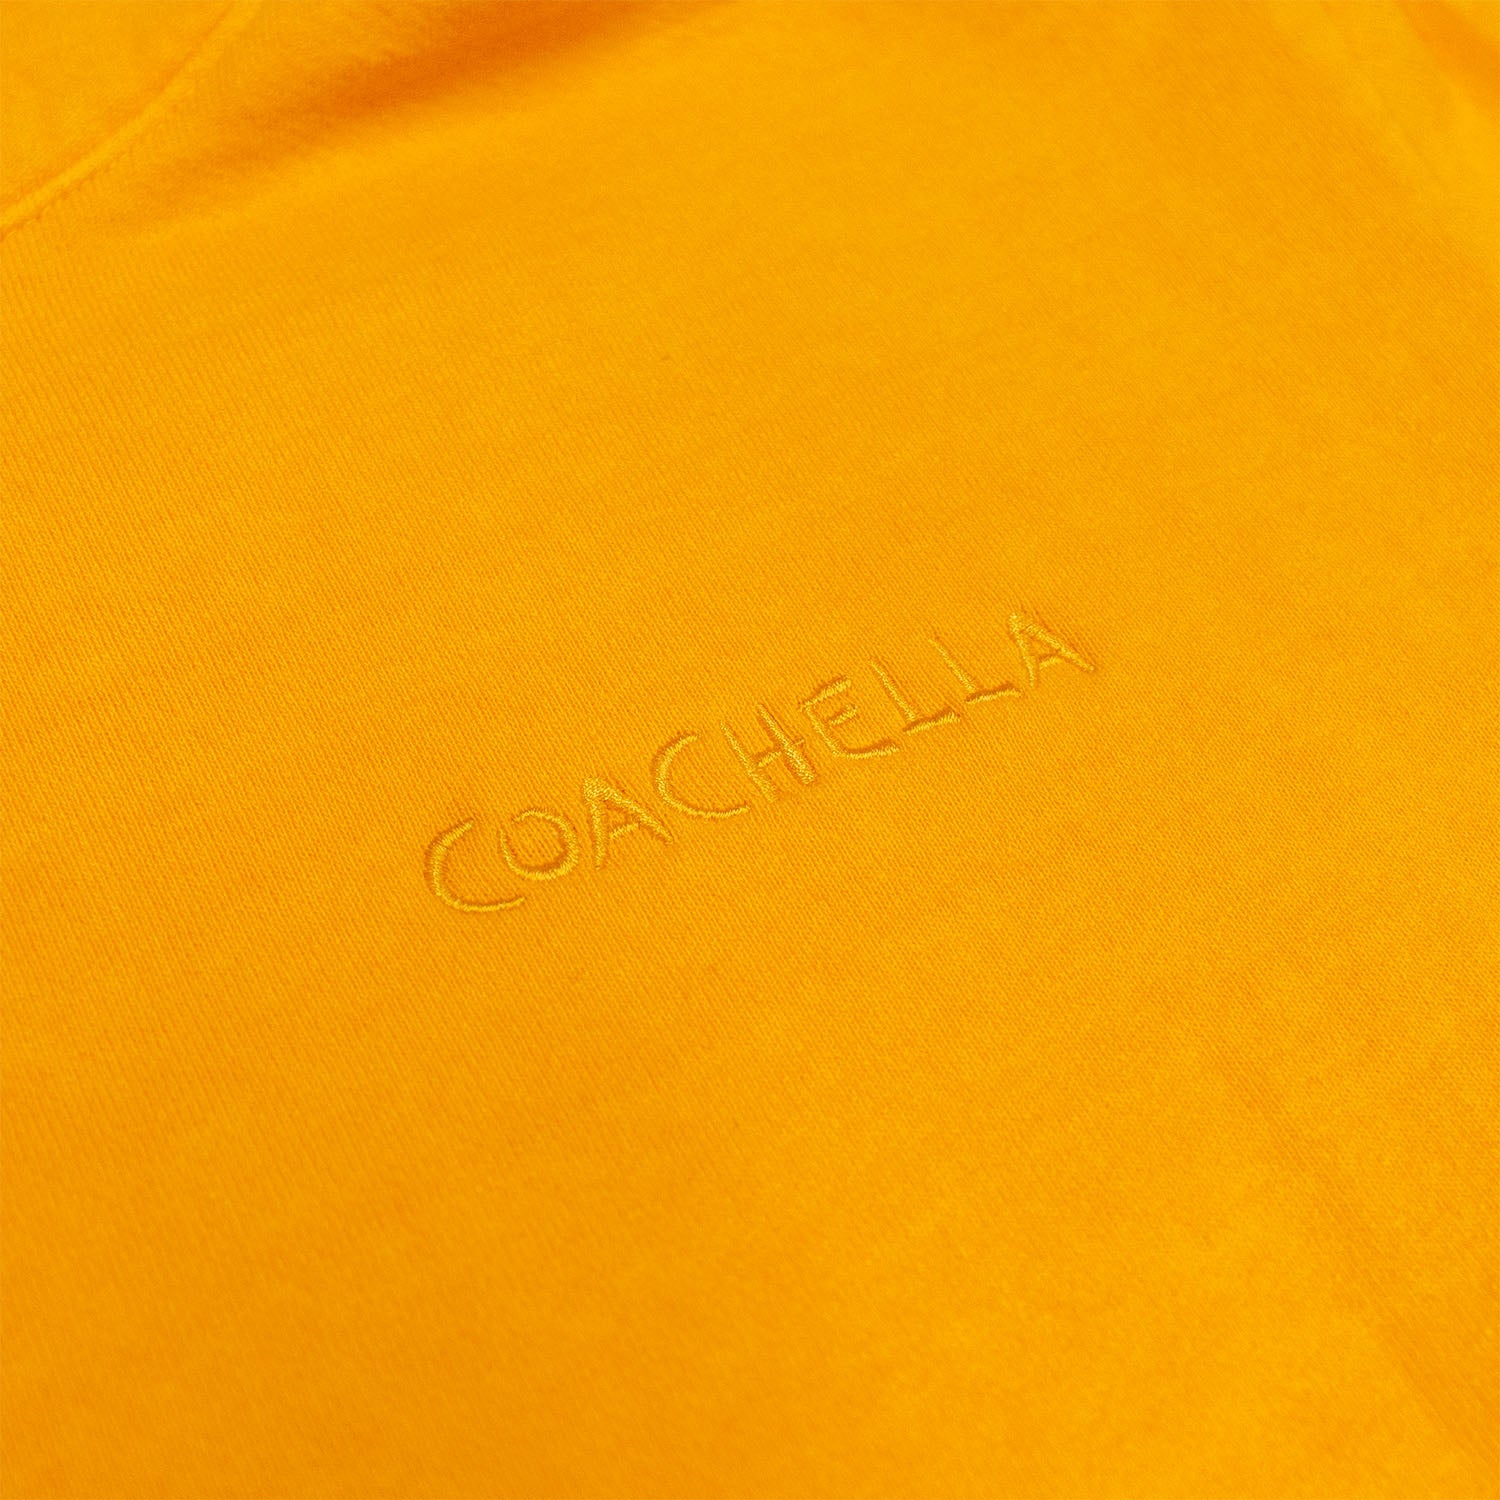 Coachella x Everybody.World 100% Hoodie - Orange